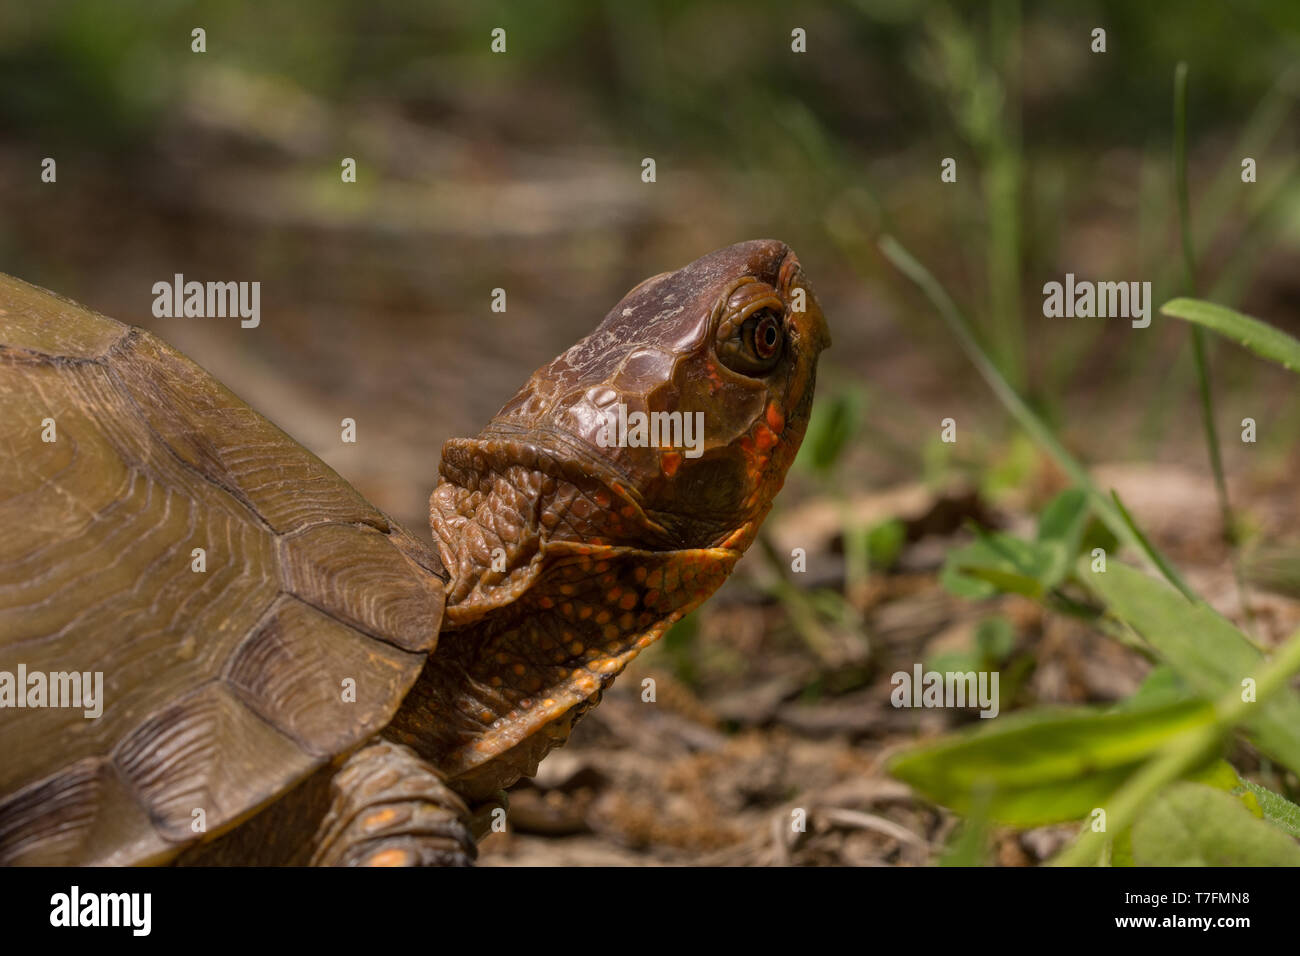 An adult male Three-toed Box Turtle (Terrapene carolina triungis) from Chatauqua County, Kansas, USA. Stock Photo